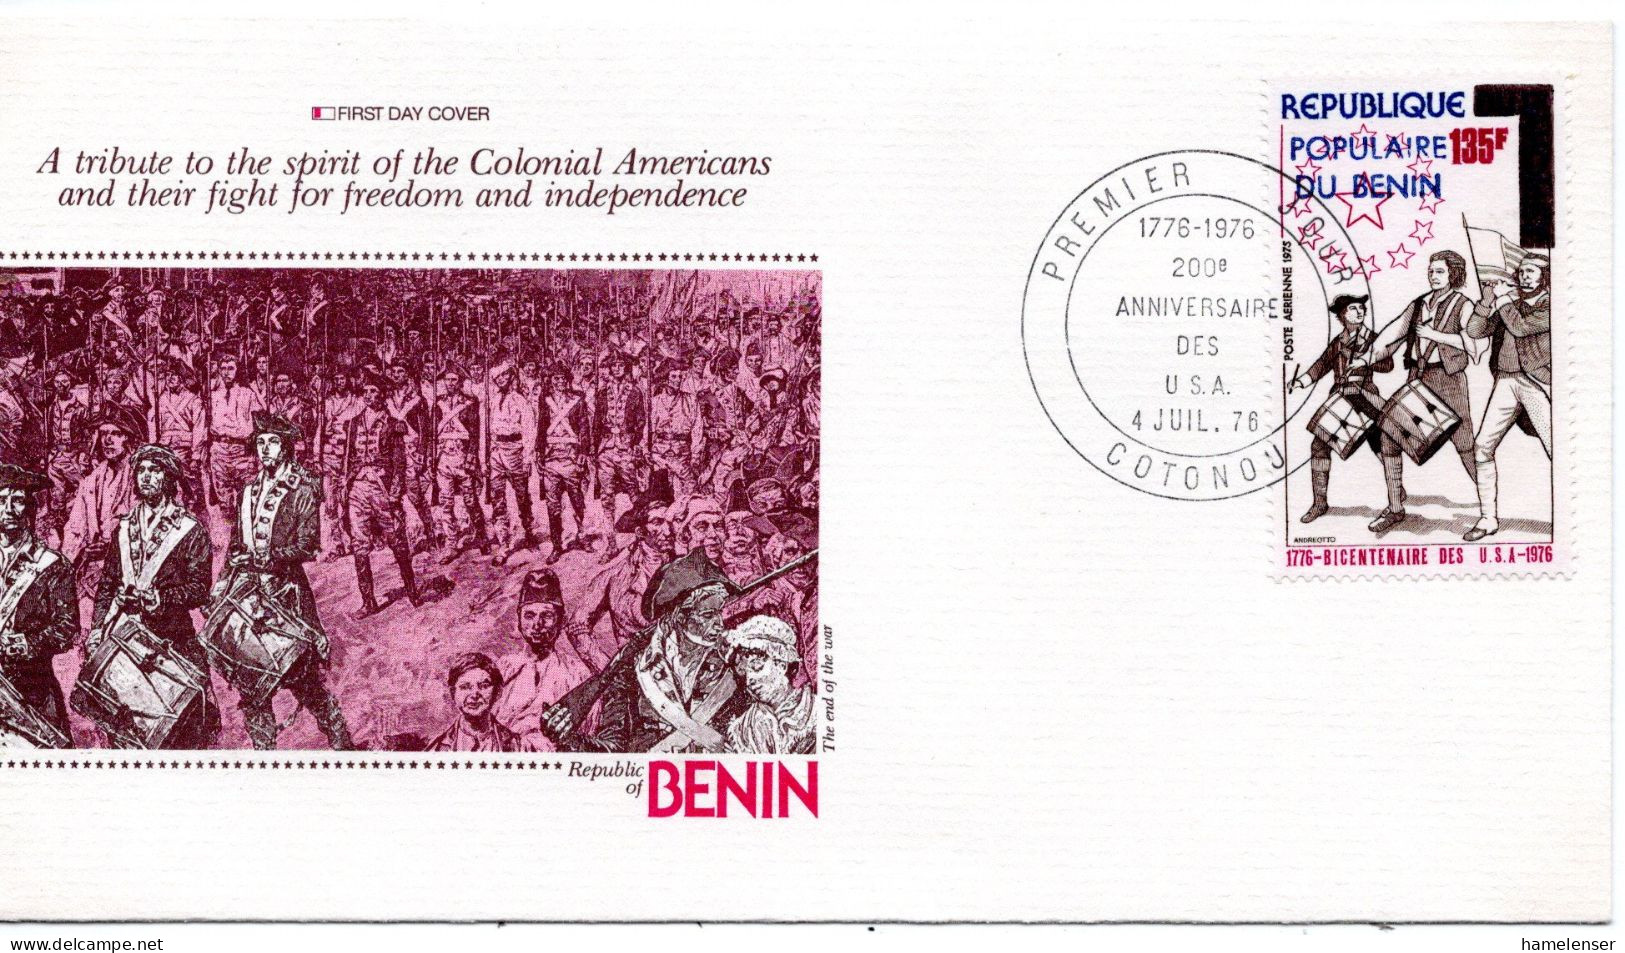 62658 - Benin - 1976 - 135F 200 Jahre USA A FDC COTONOU - Indépendance USA